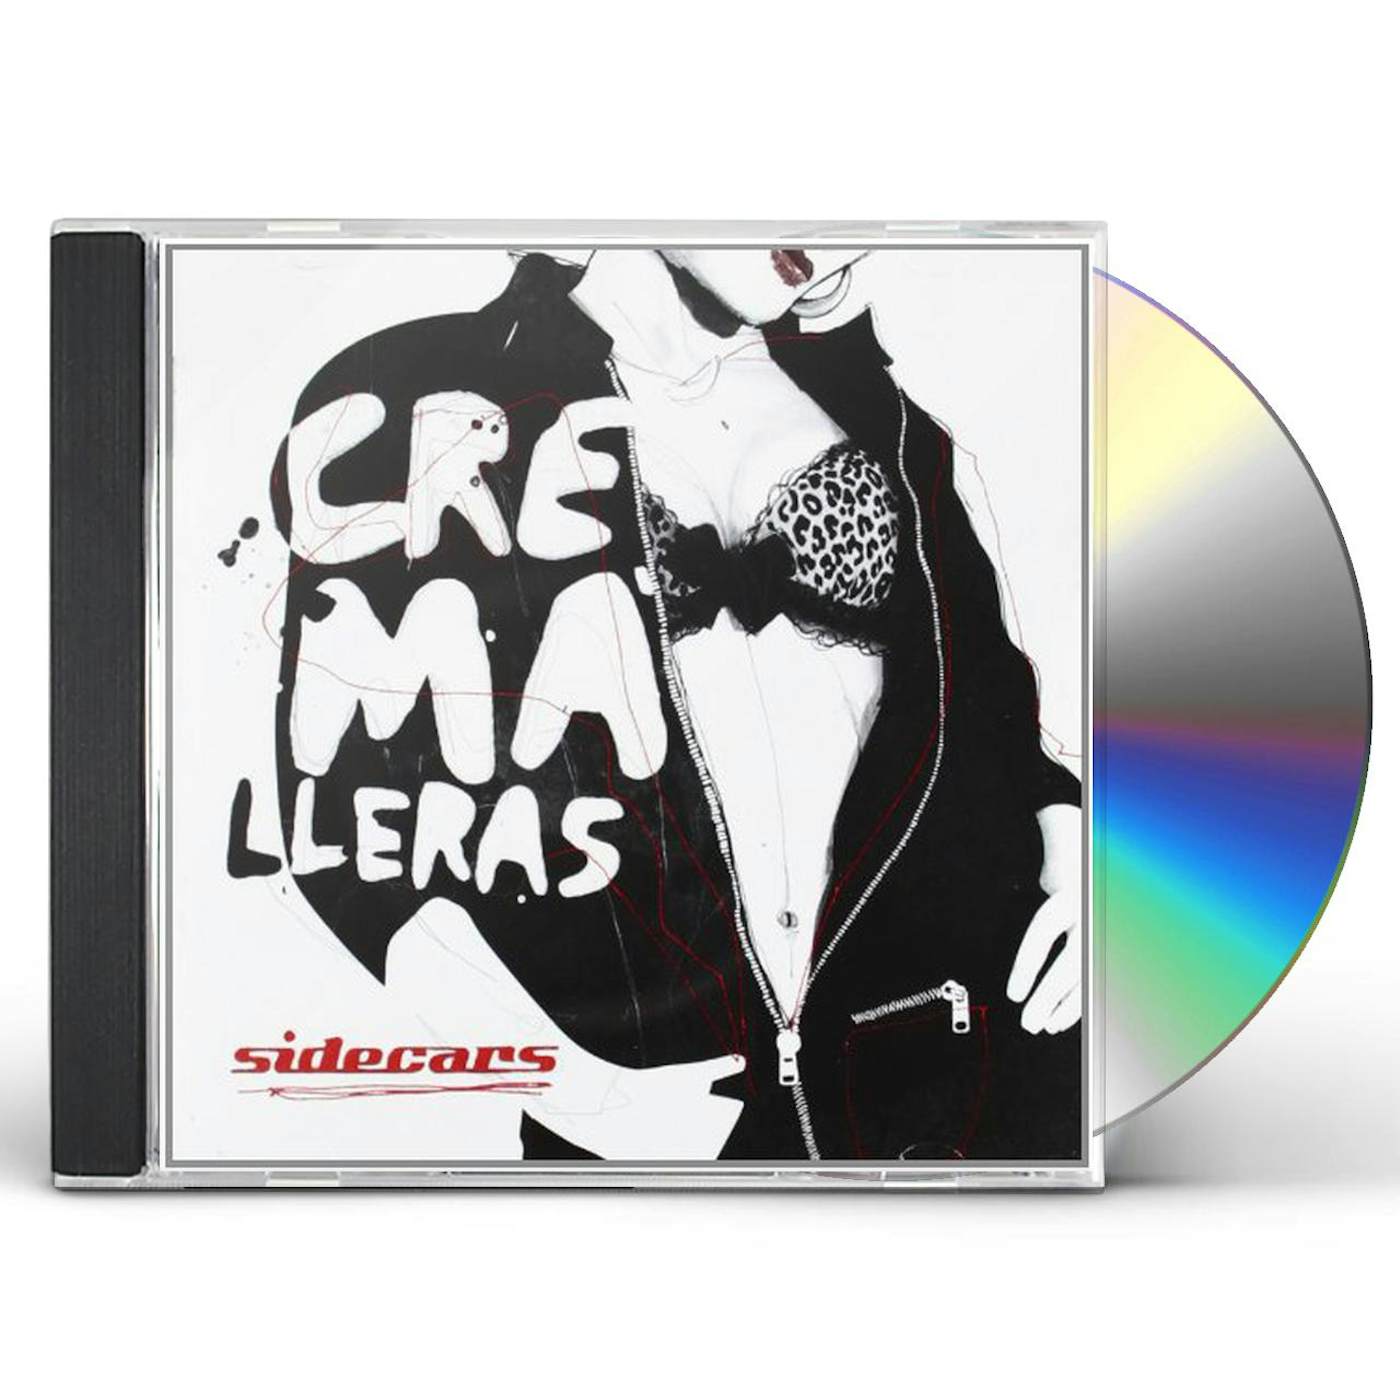 Sidecars CREMALLERAS (CRISTAL) CD